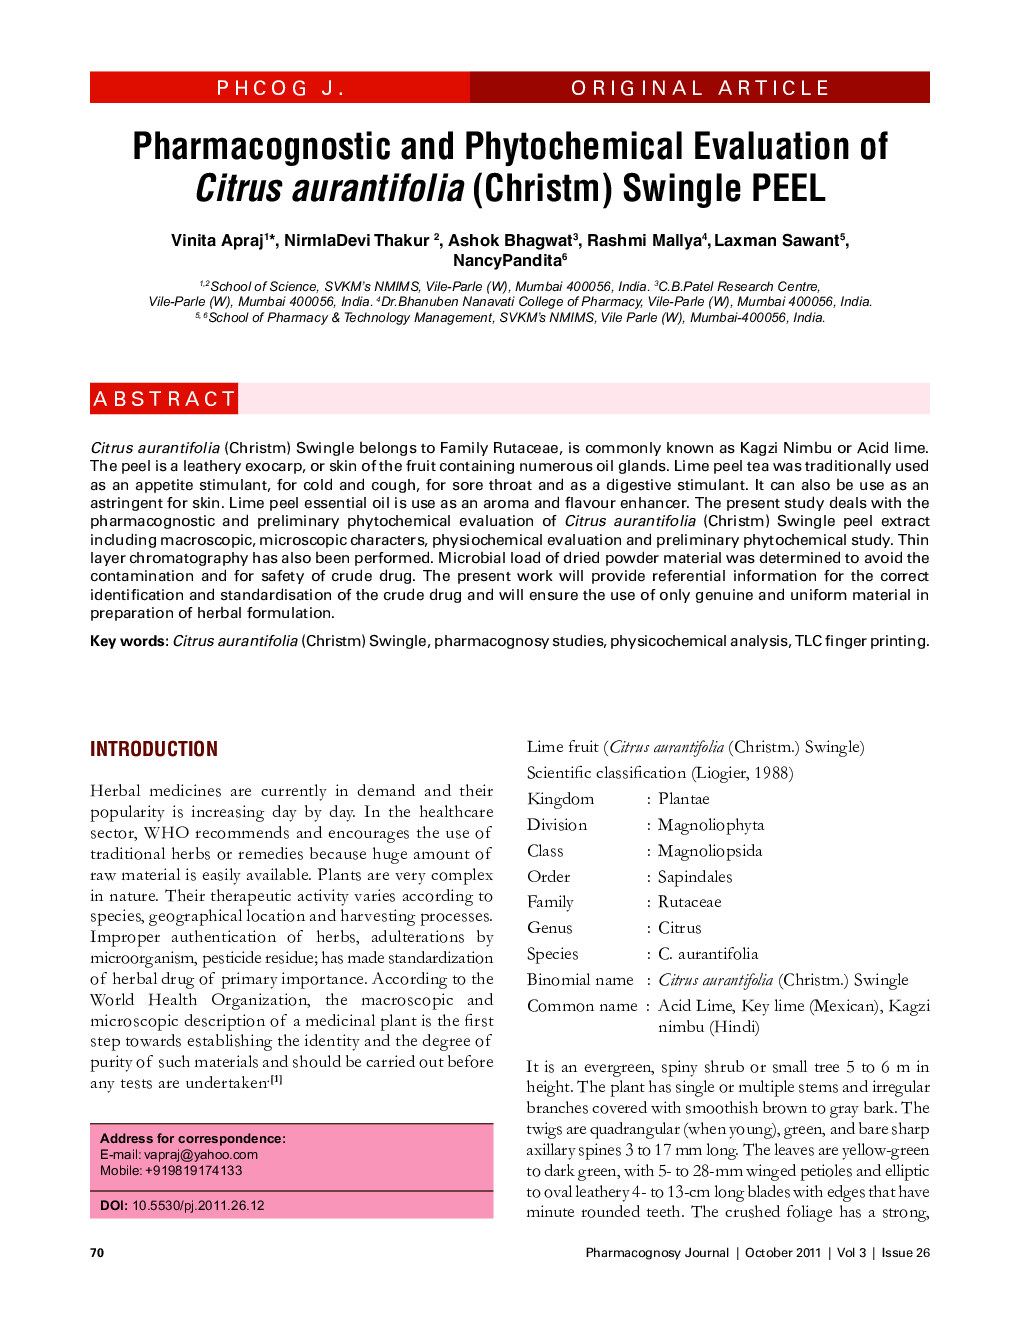 Pharmacognostic and Phytochemical Evaluation of Citrus aurantifolia (Christm) Swingle PEEL